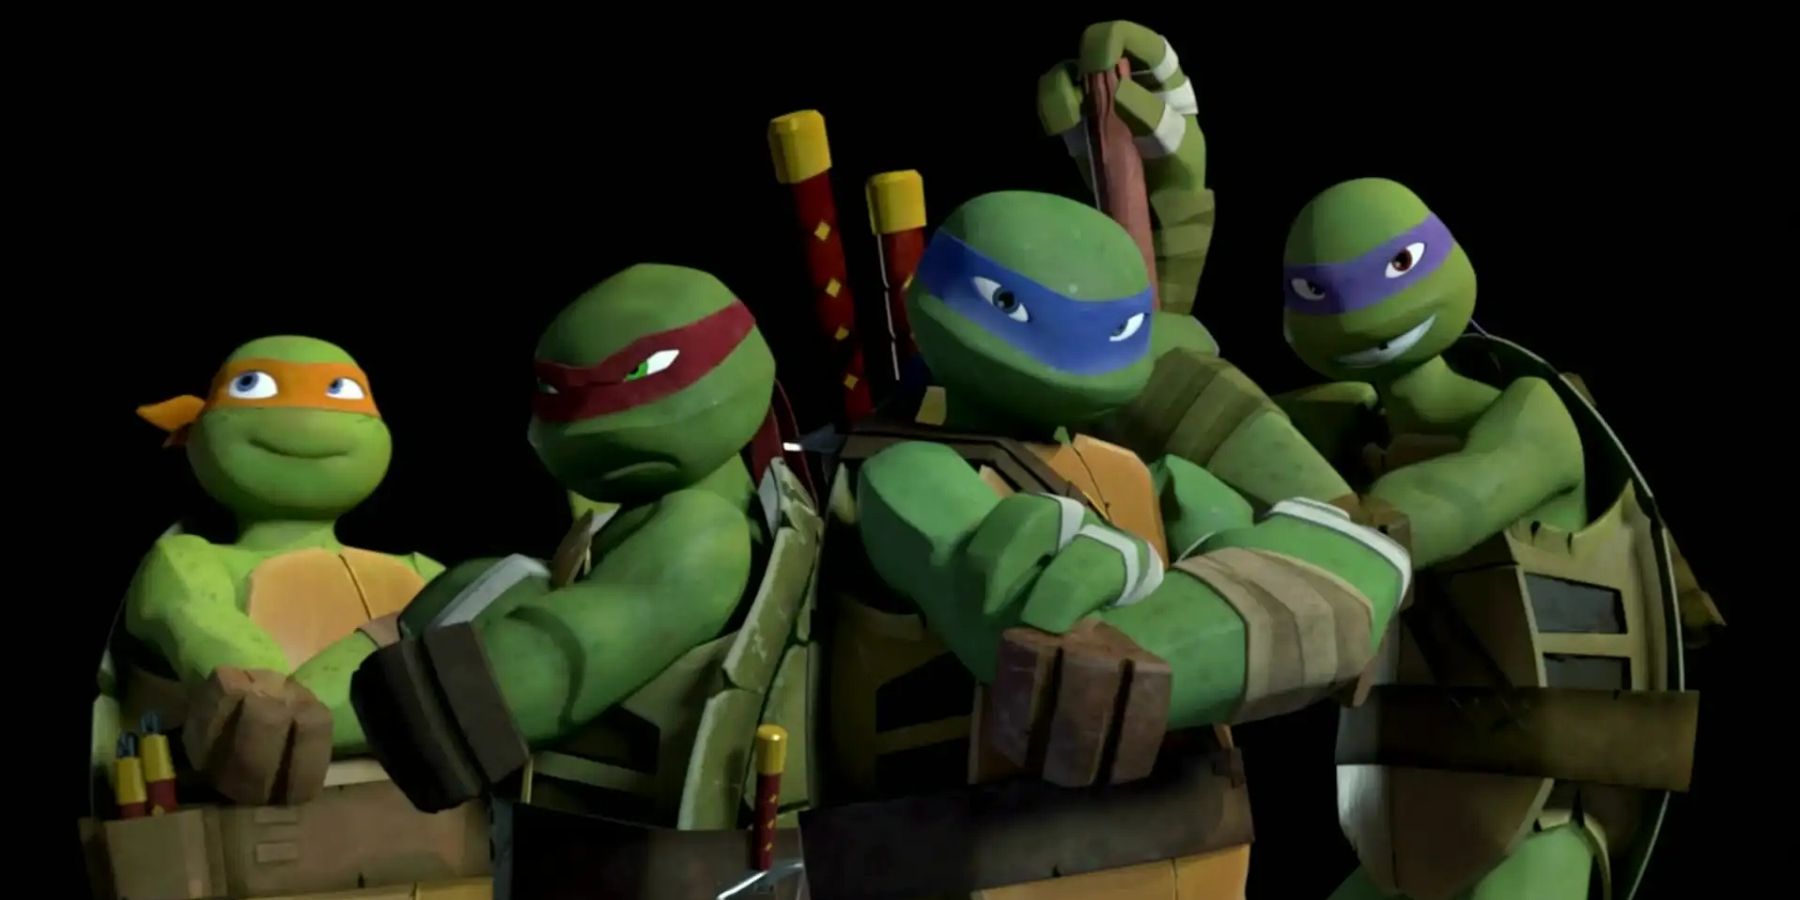 Teenage Mutant Ninja Turtles - Image from the Nickelodeon show